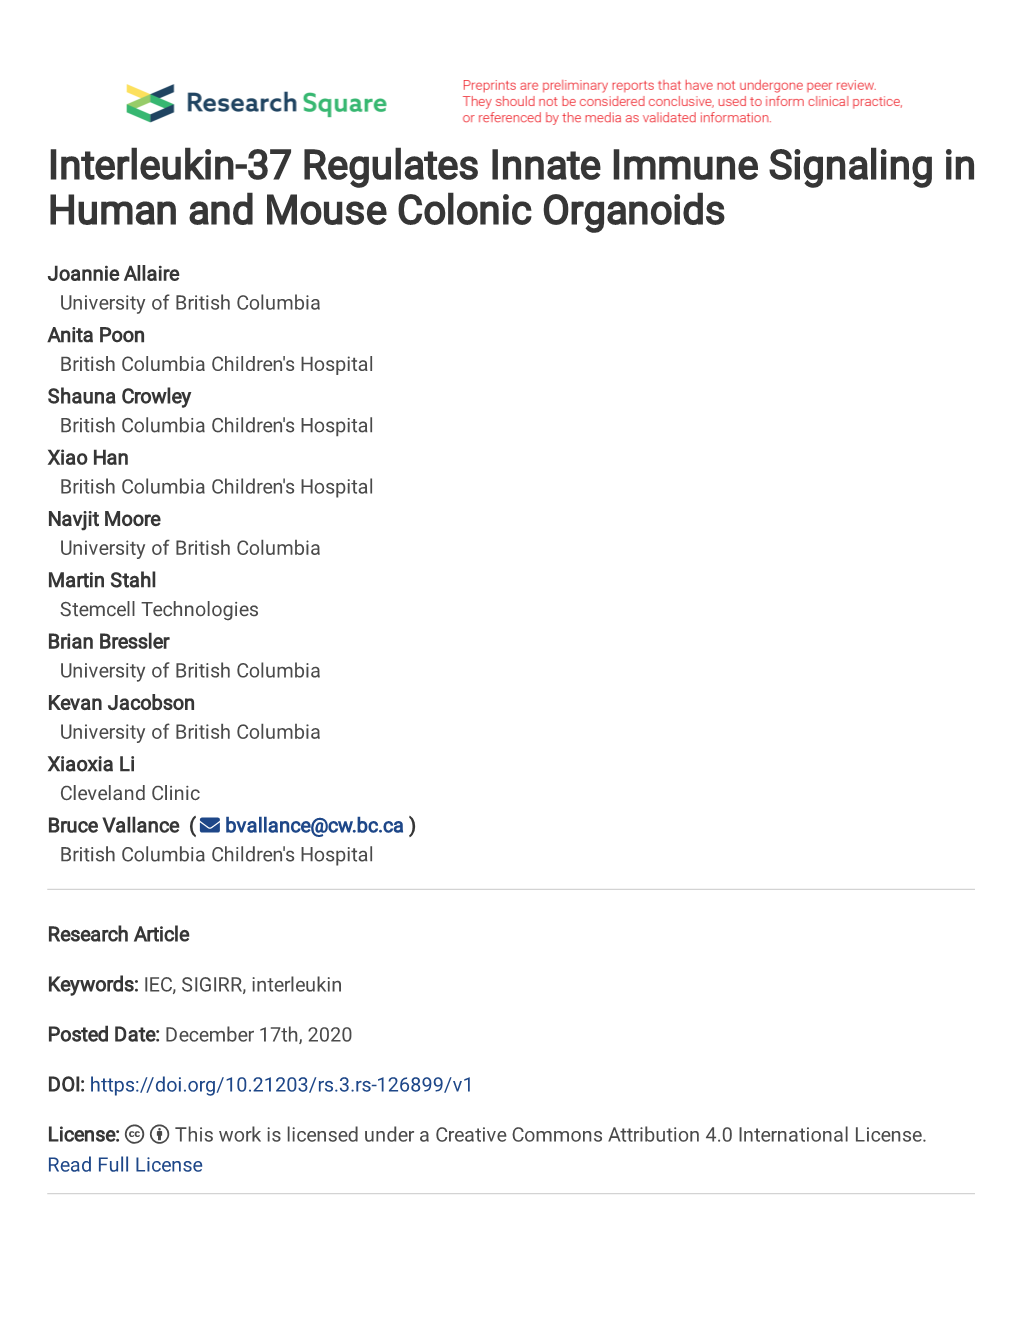 Interleukin-37 Regulates Innate Immune Signaling in Human and Mouse Colonic Organoids